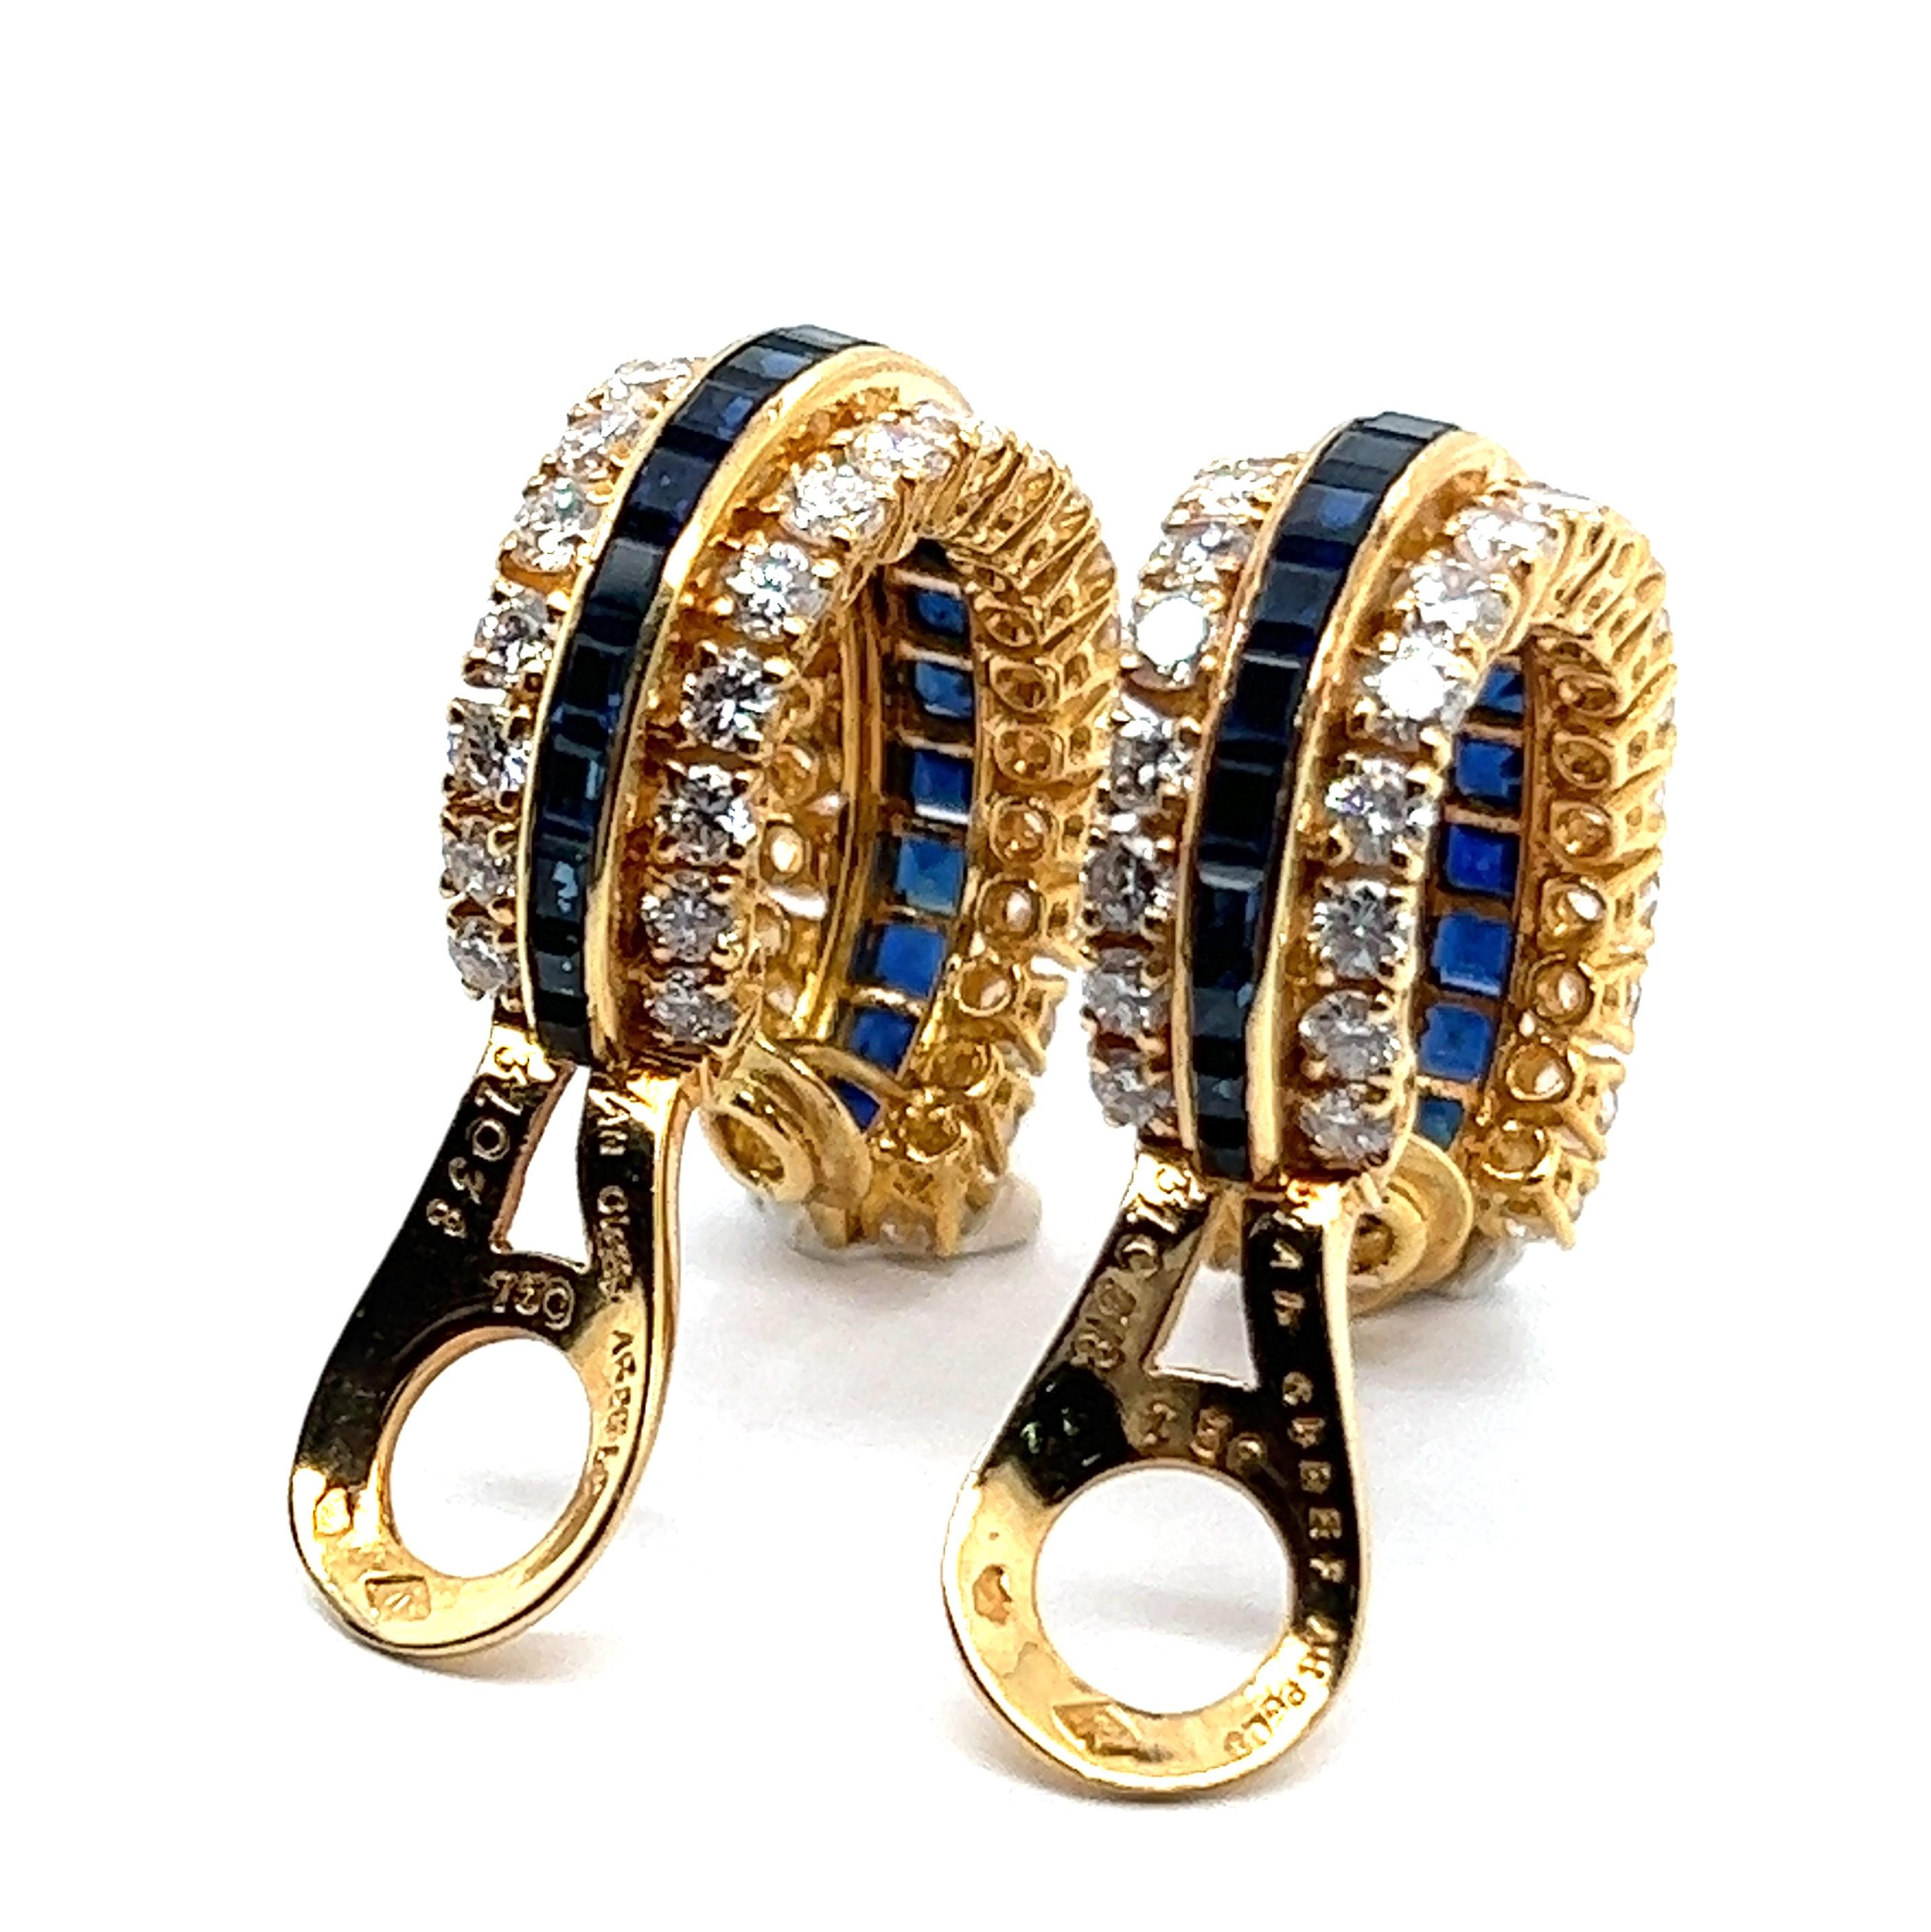 Elegant Van Cleef & Arpels Earclips in 18K Gold with Sapphires and Diamonds 3